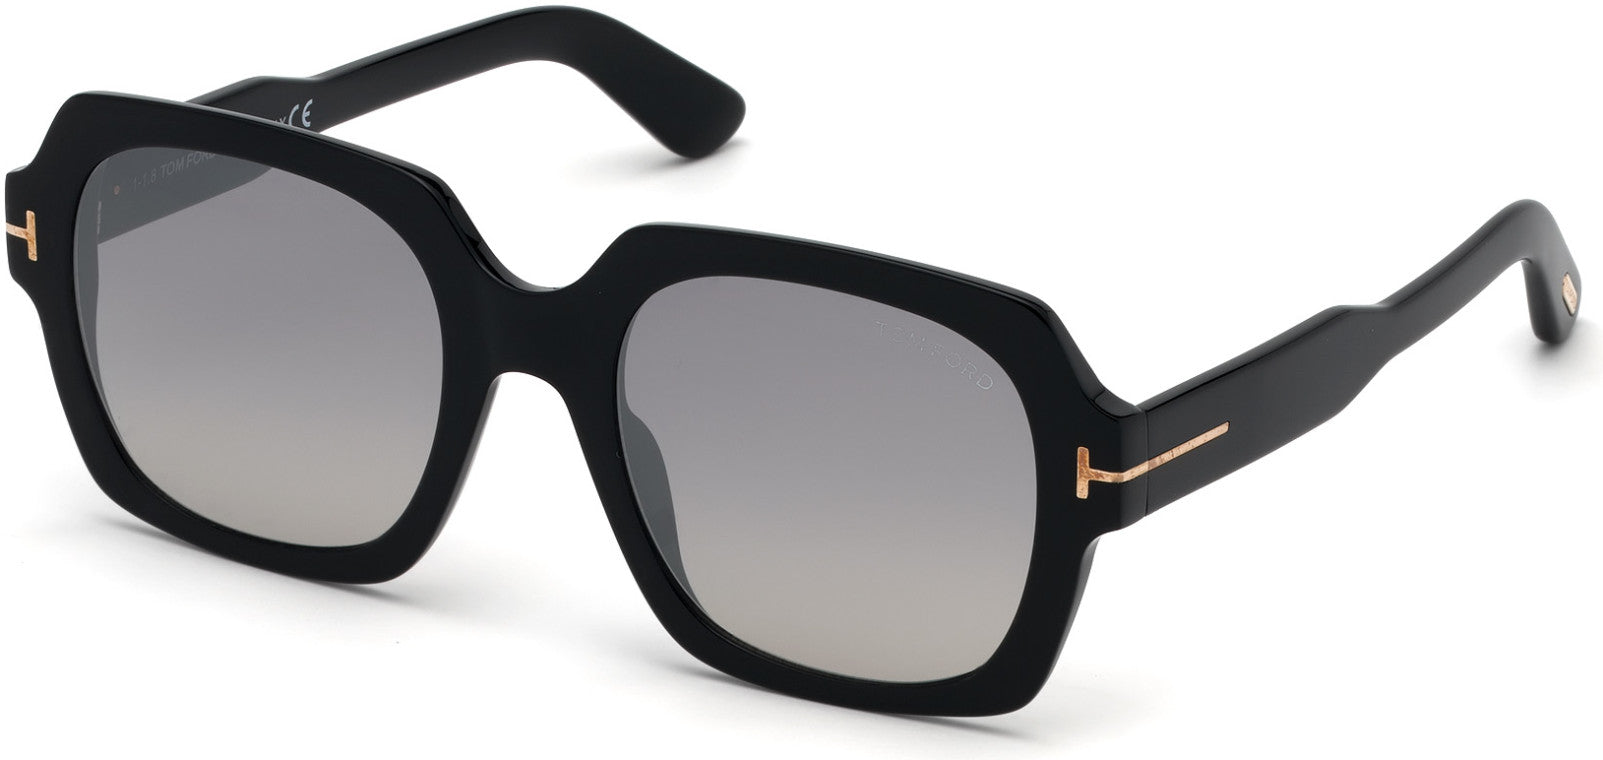 Tom Ford FT0660 Autumn Geometric Sunglasses 01C-01C - Shiny Black/ Gradient Smoke W. Silver Flash Lenses